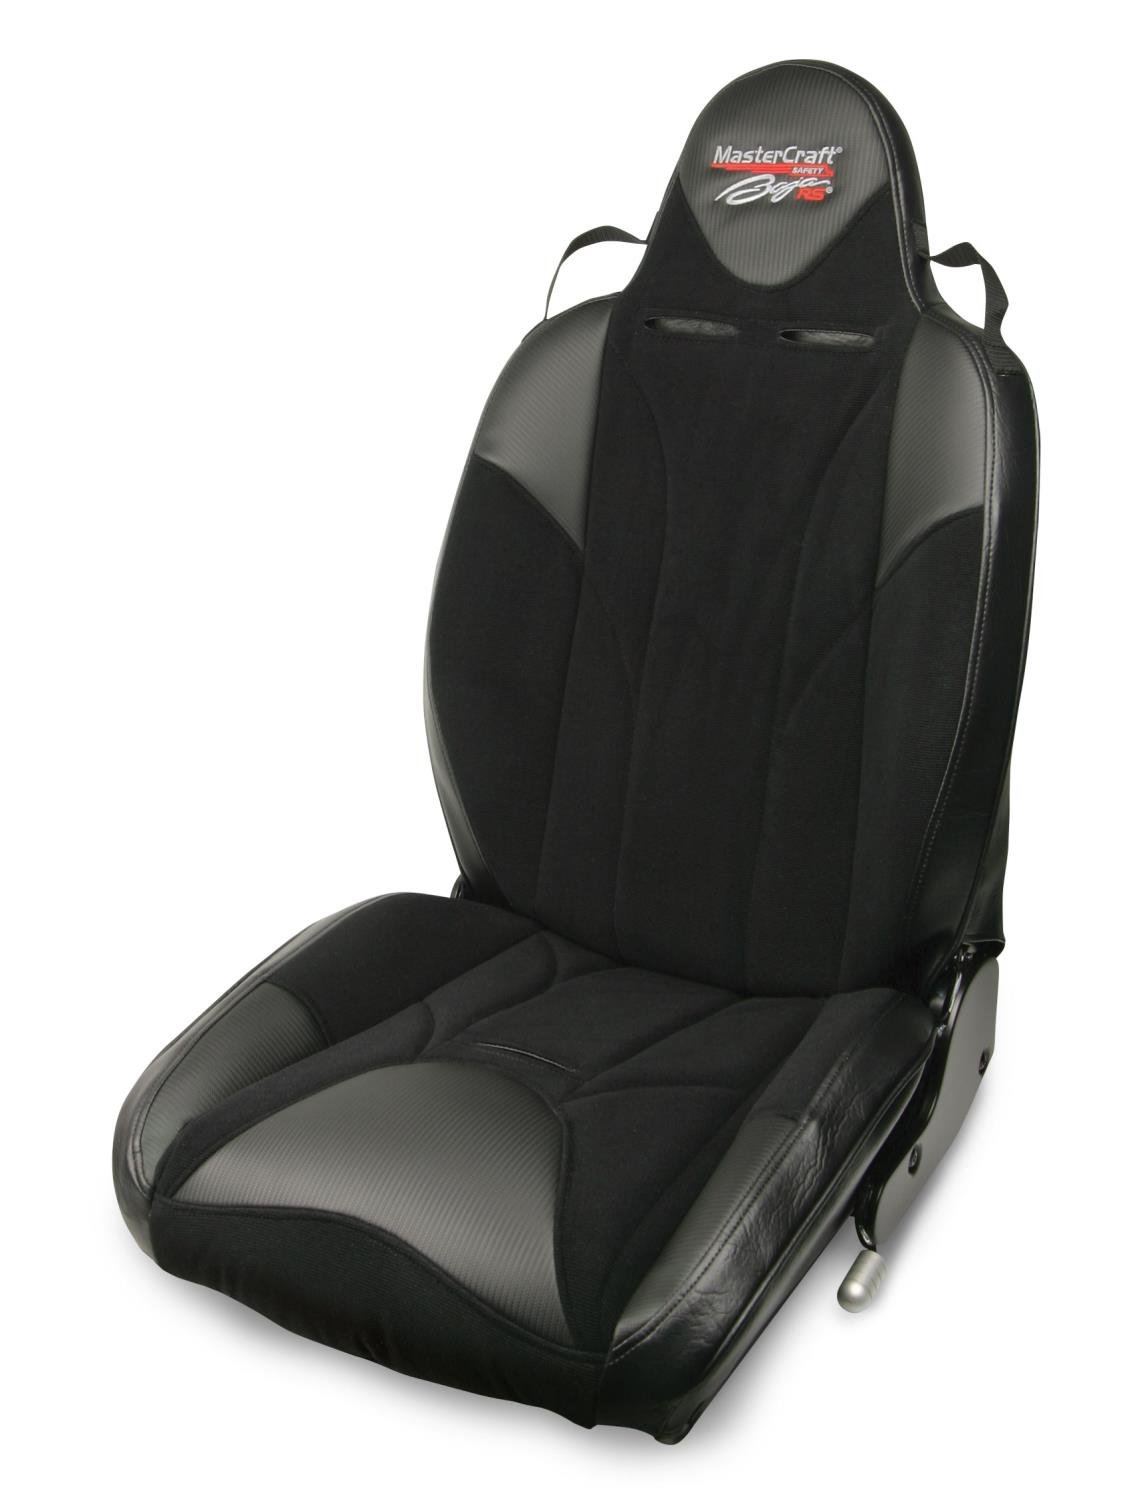 504124 MasterCraft Baja RS w/Fixed Headrest, DirtSport, Black